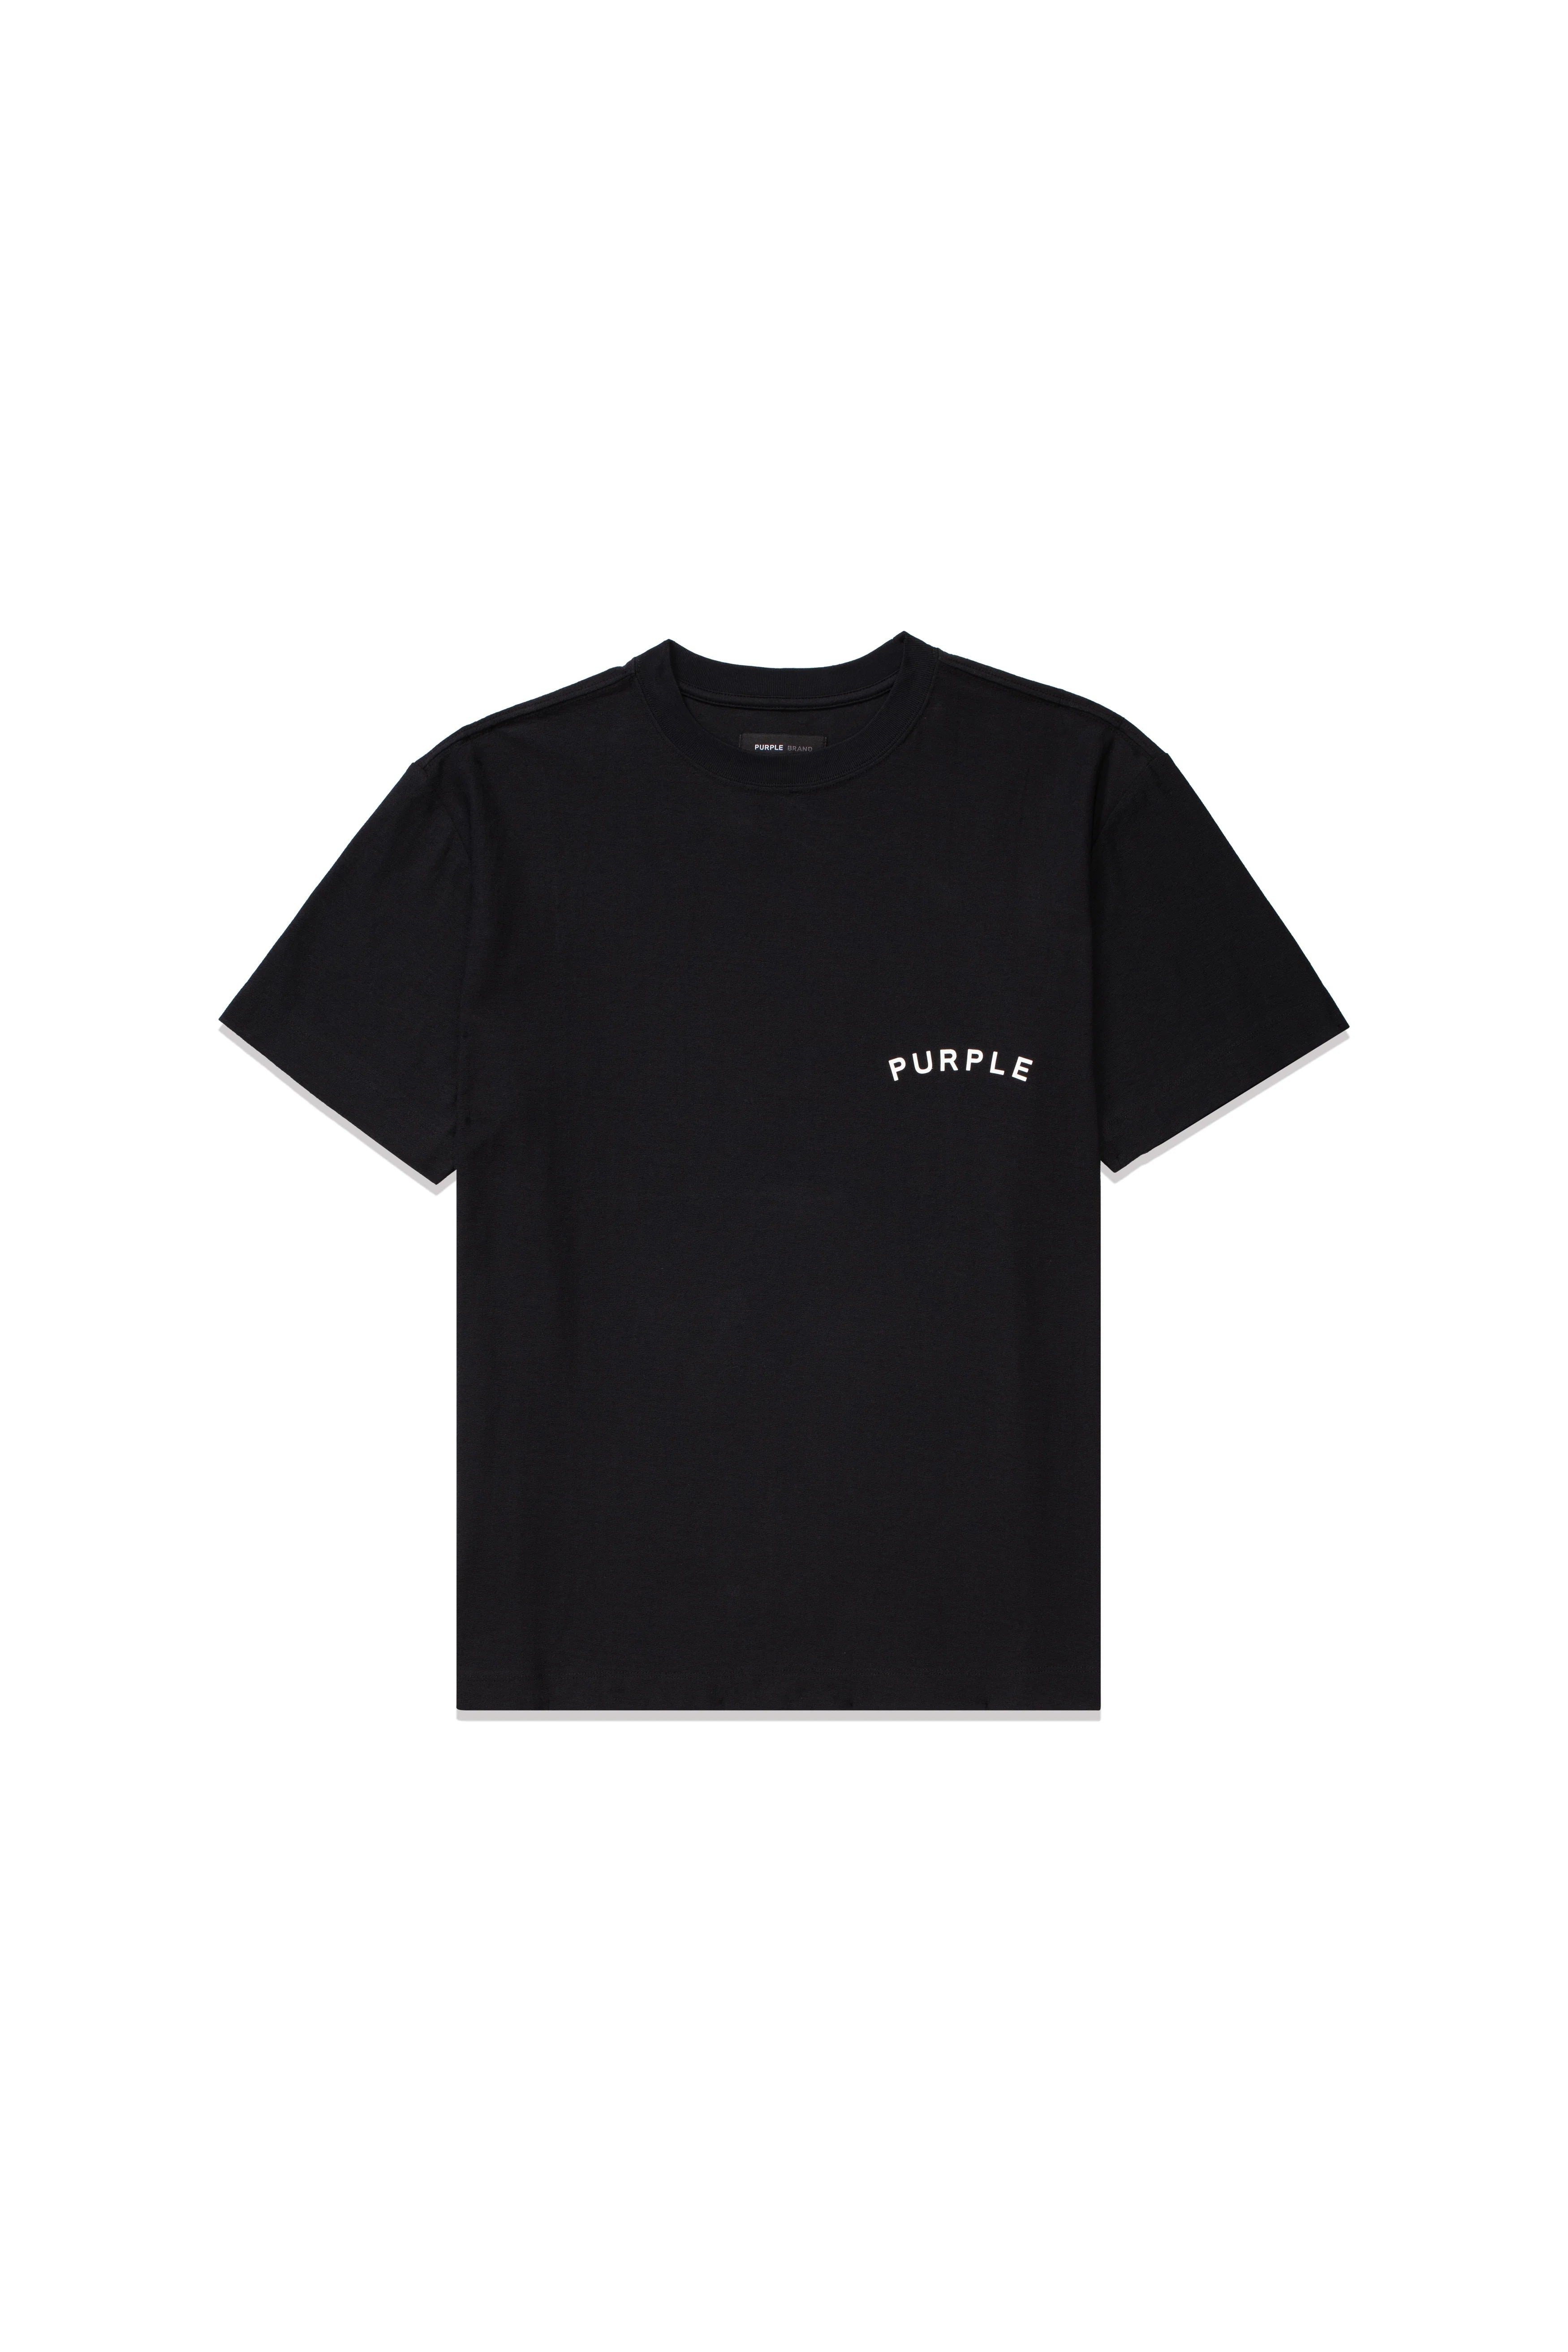 PURPLE BRAND Curve Wordmark Black Beauty T-Shirt